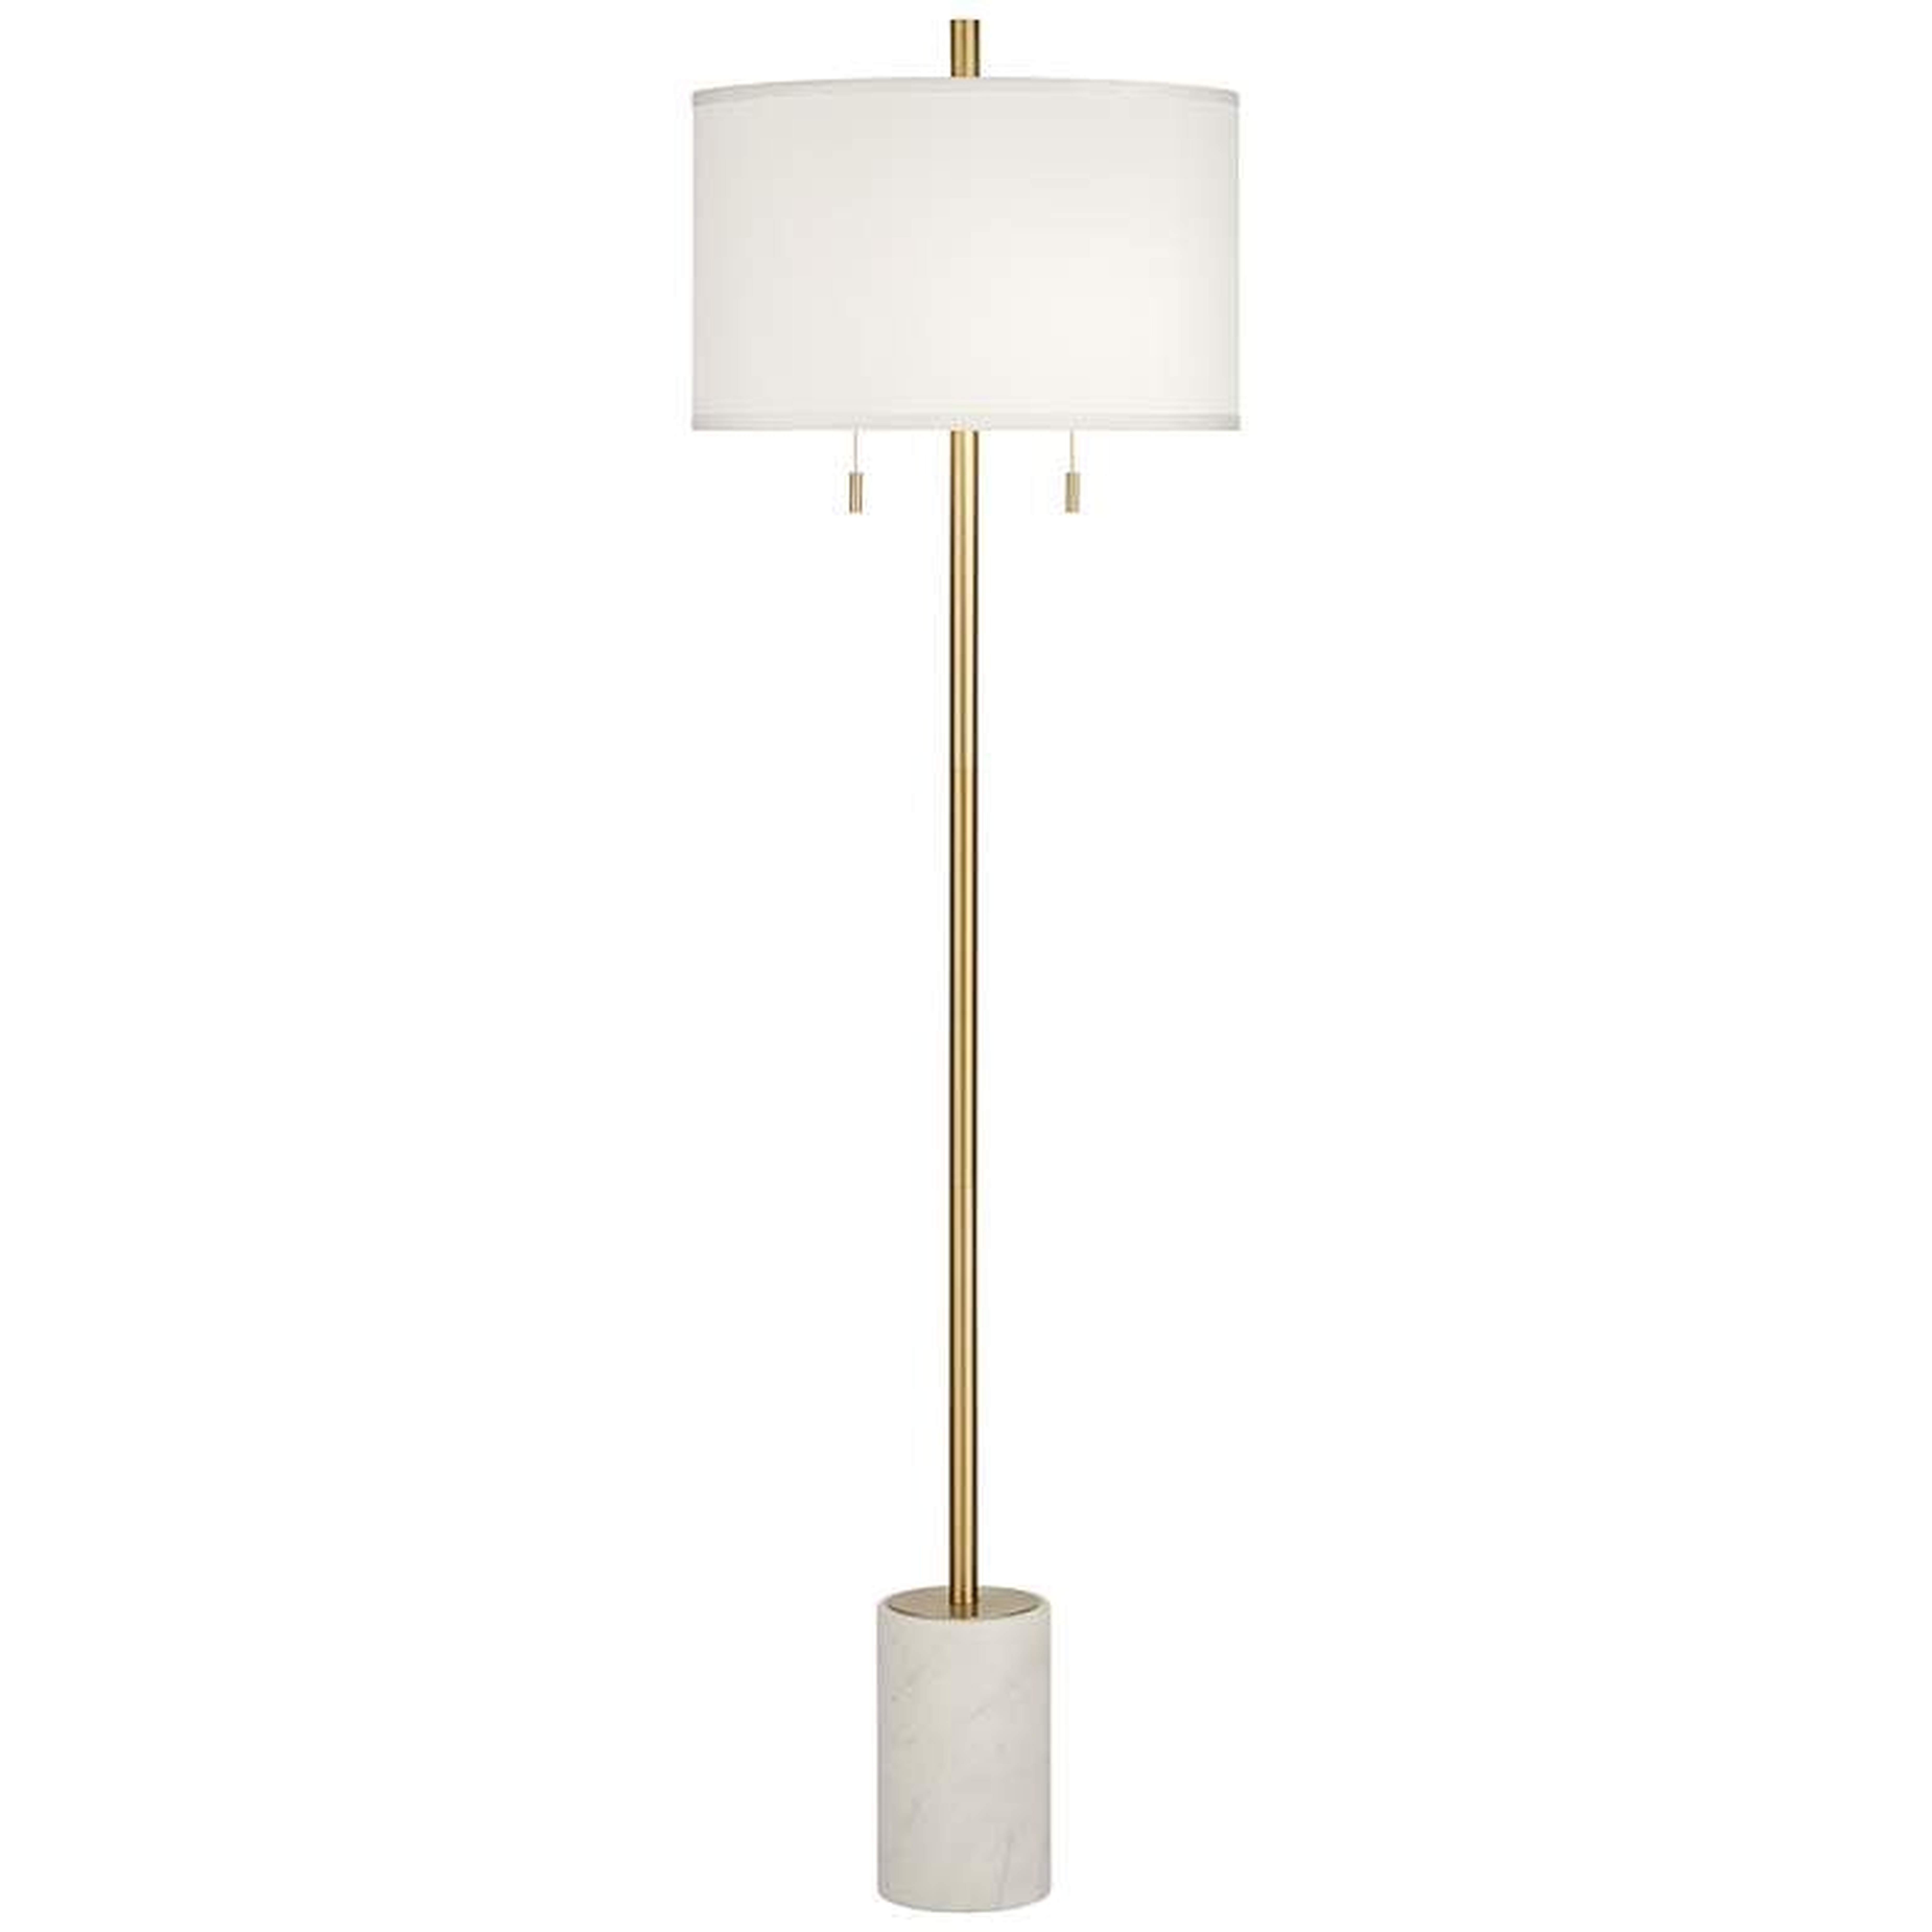 Milan Modern Floor Lamp with Marble Base - Lamps Plus